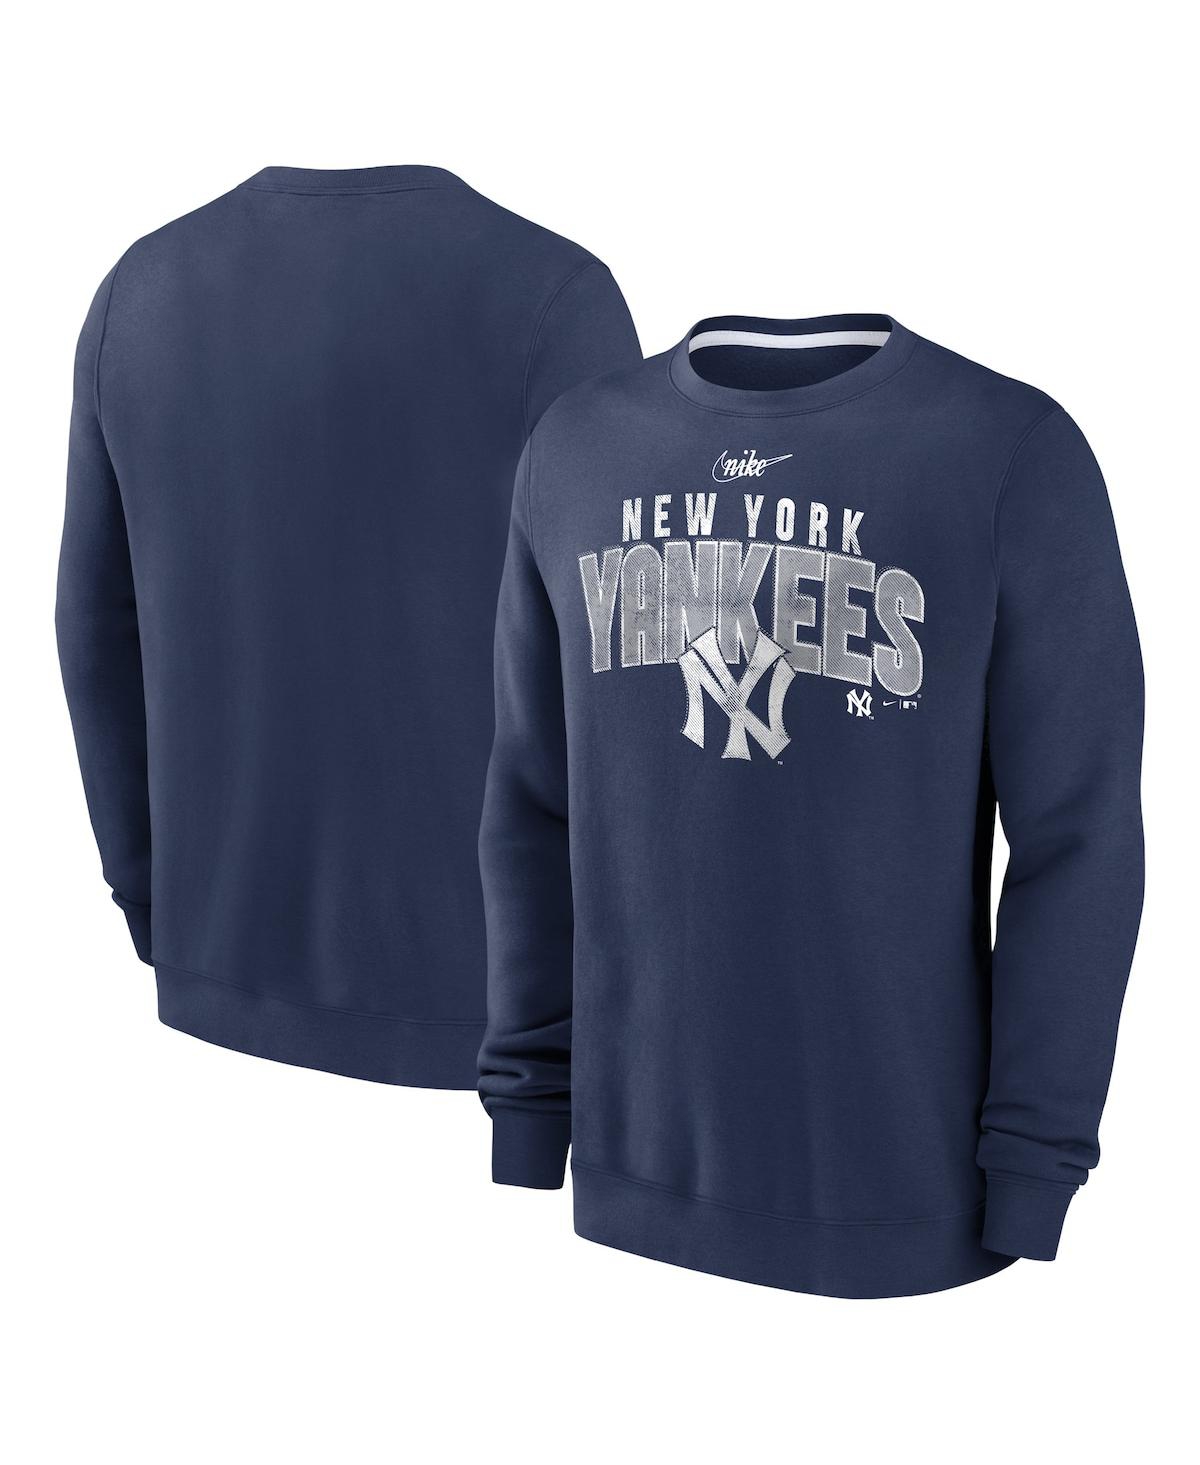 Men's Nike Navy New York Yankees Alternate Authentic Team Jersey